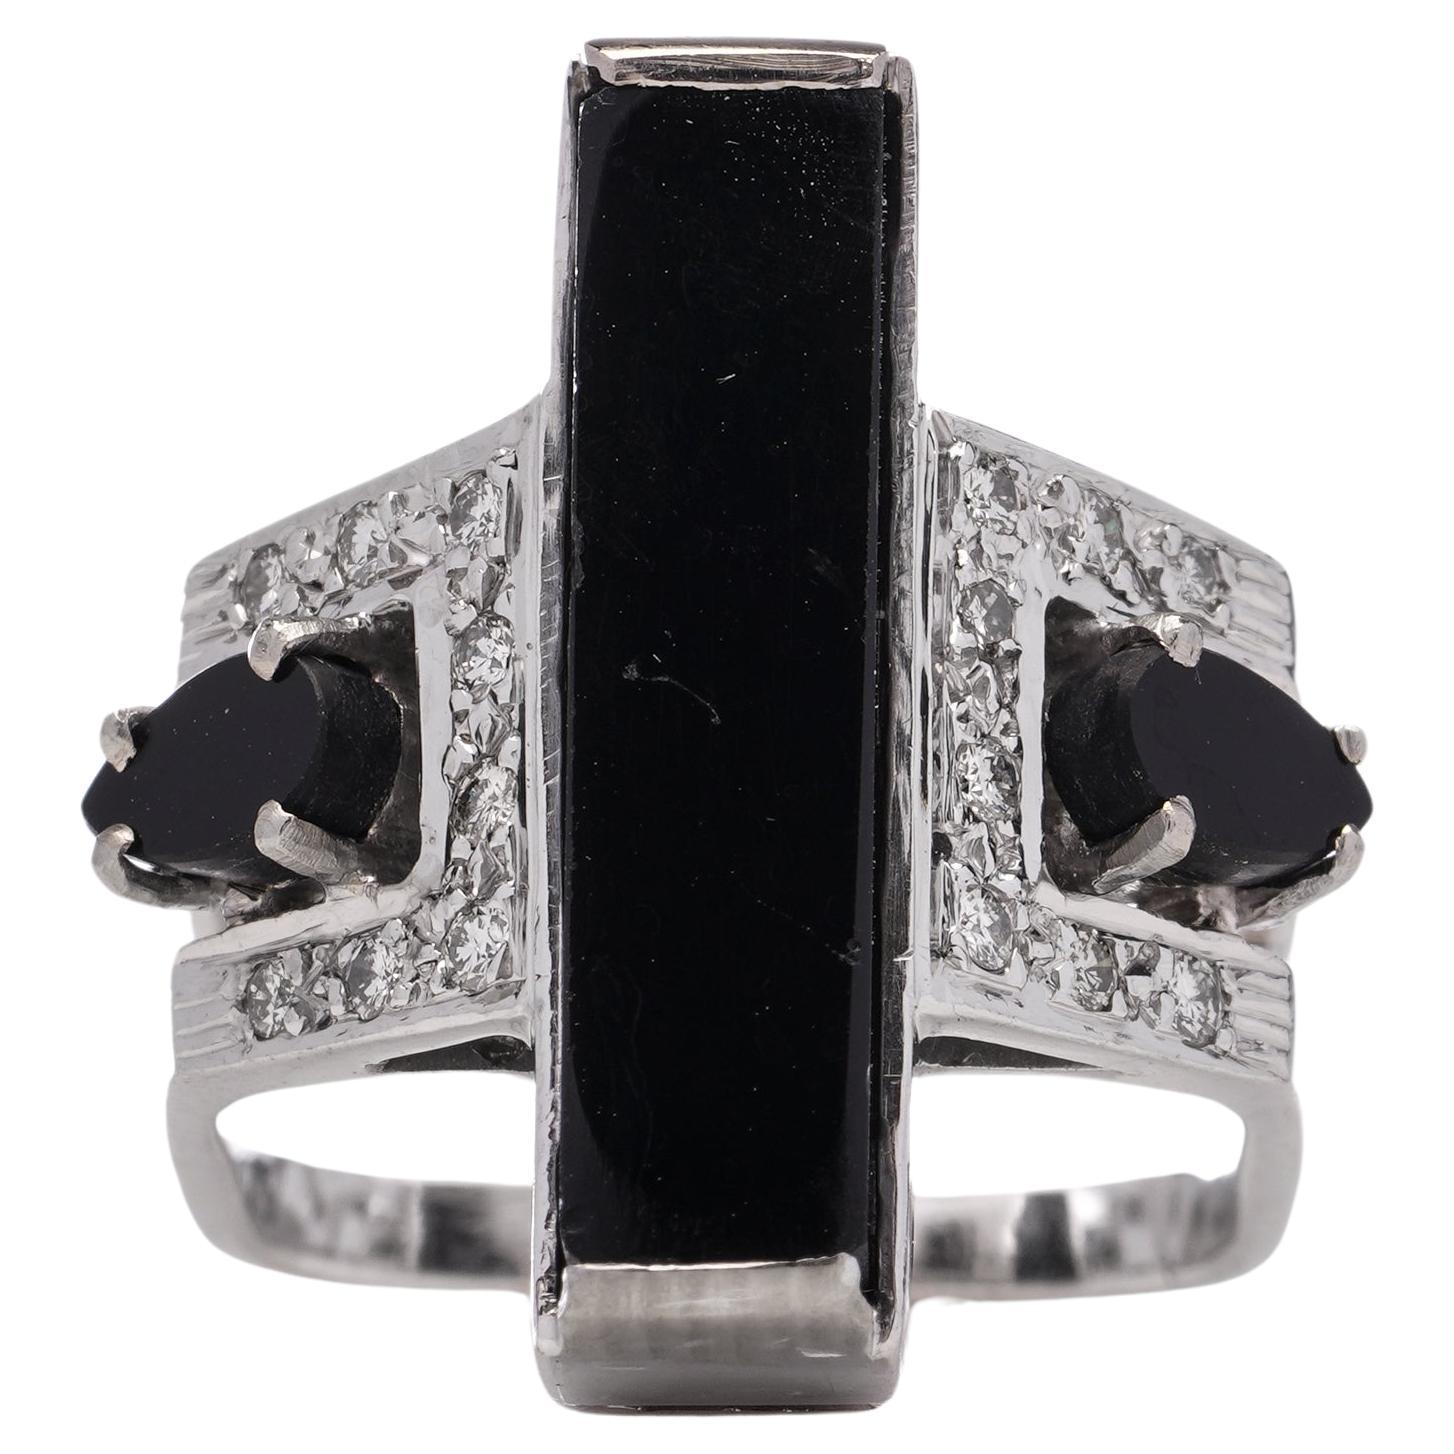 Alan Martin Gard vintage 18kt white gold women's ring with onyx and diamonds. 